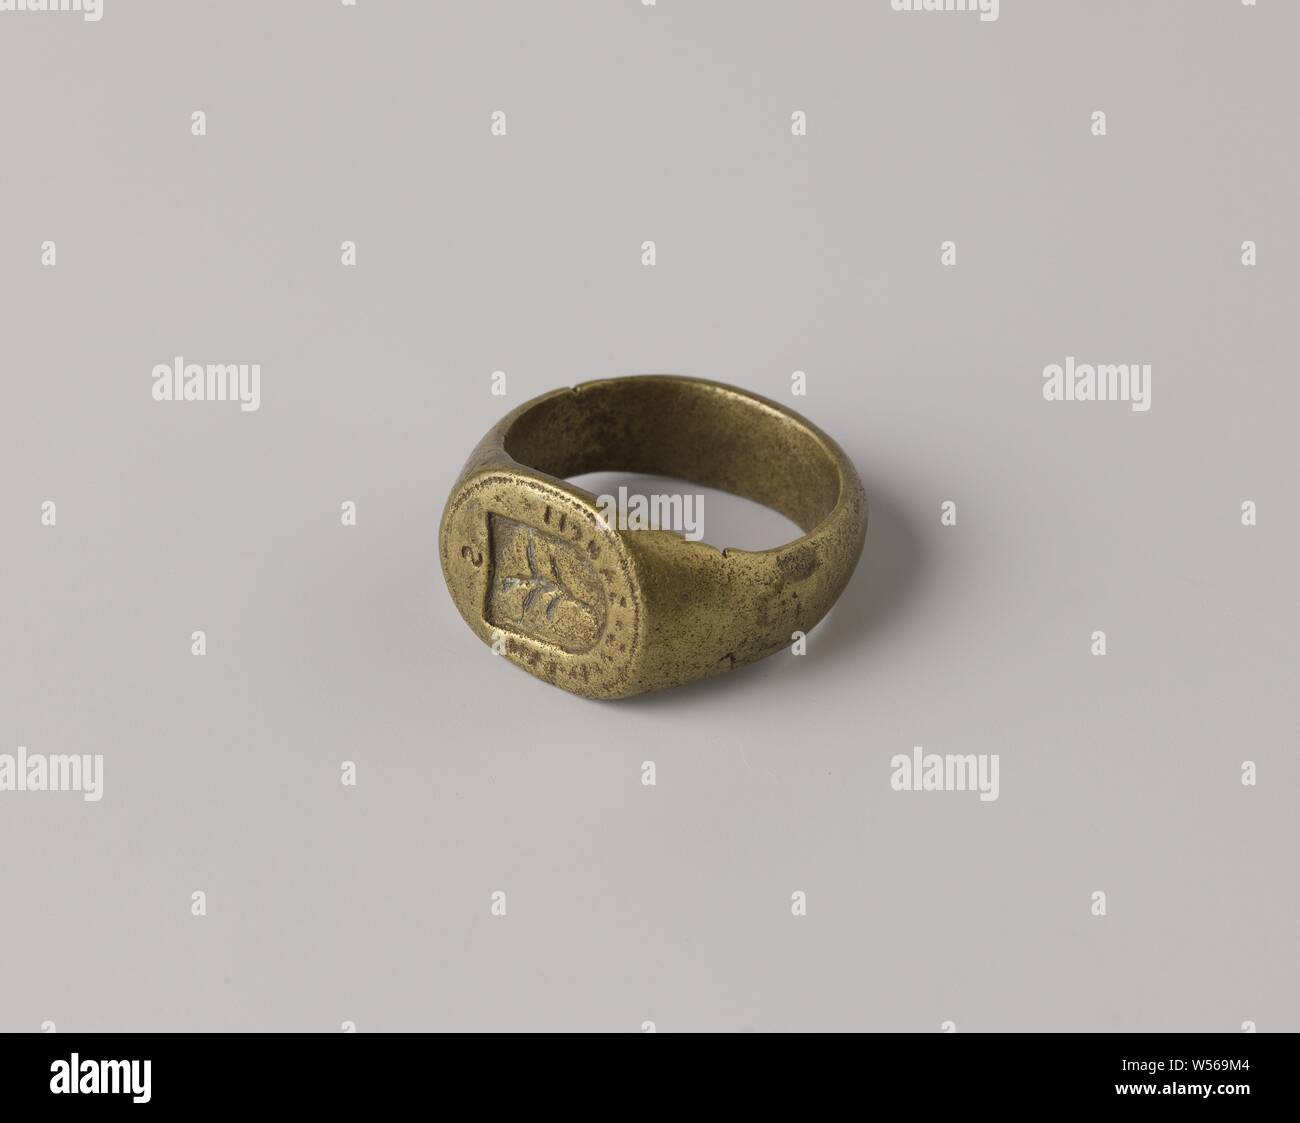 Design Your Own Custom Signet Ring – Royal Signet